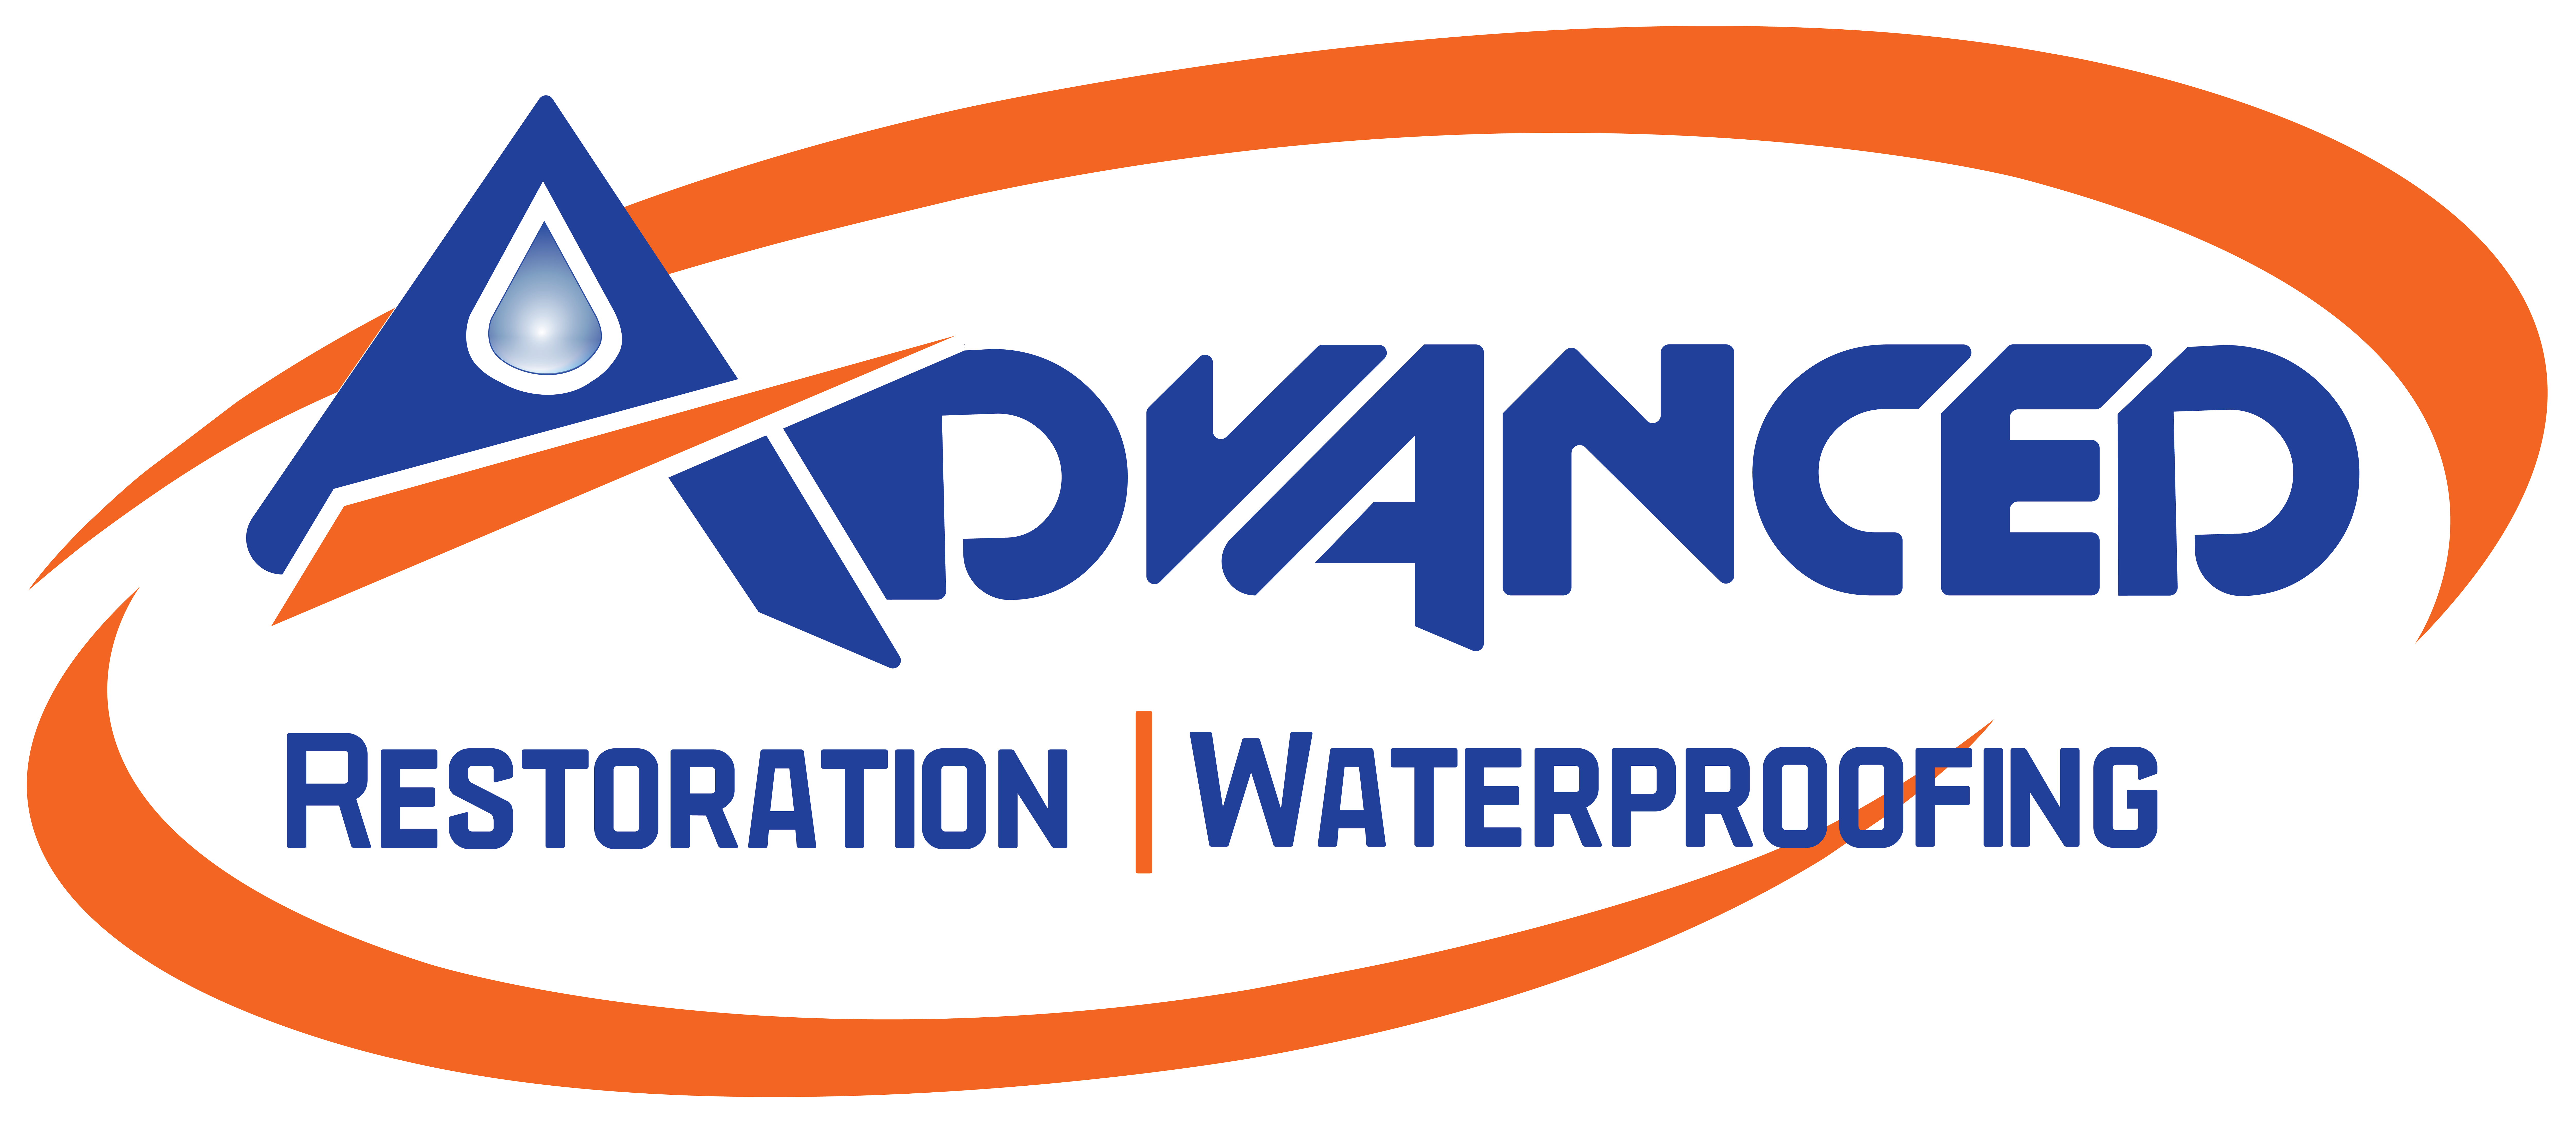 Advanced Restoration & Waterproofing, LLC Logo